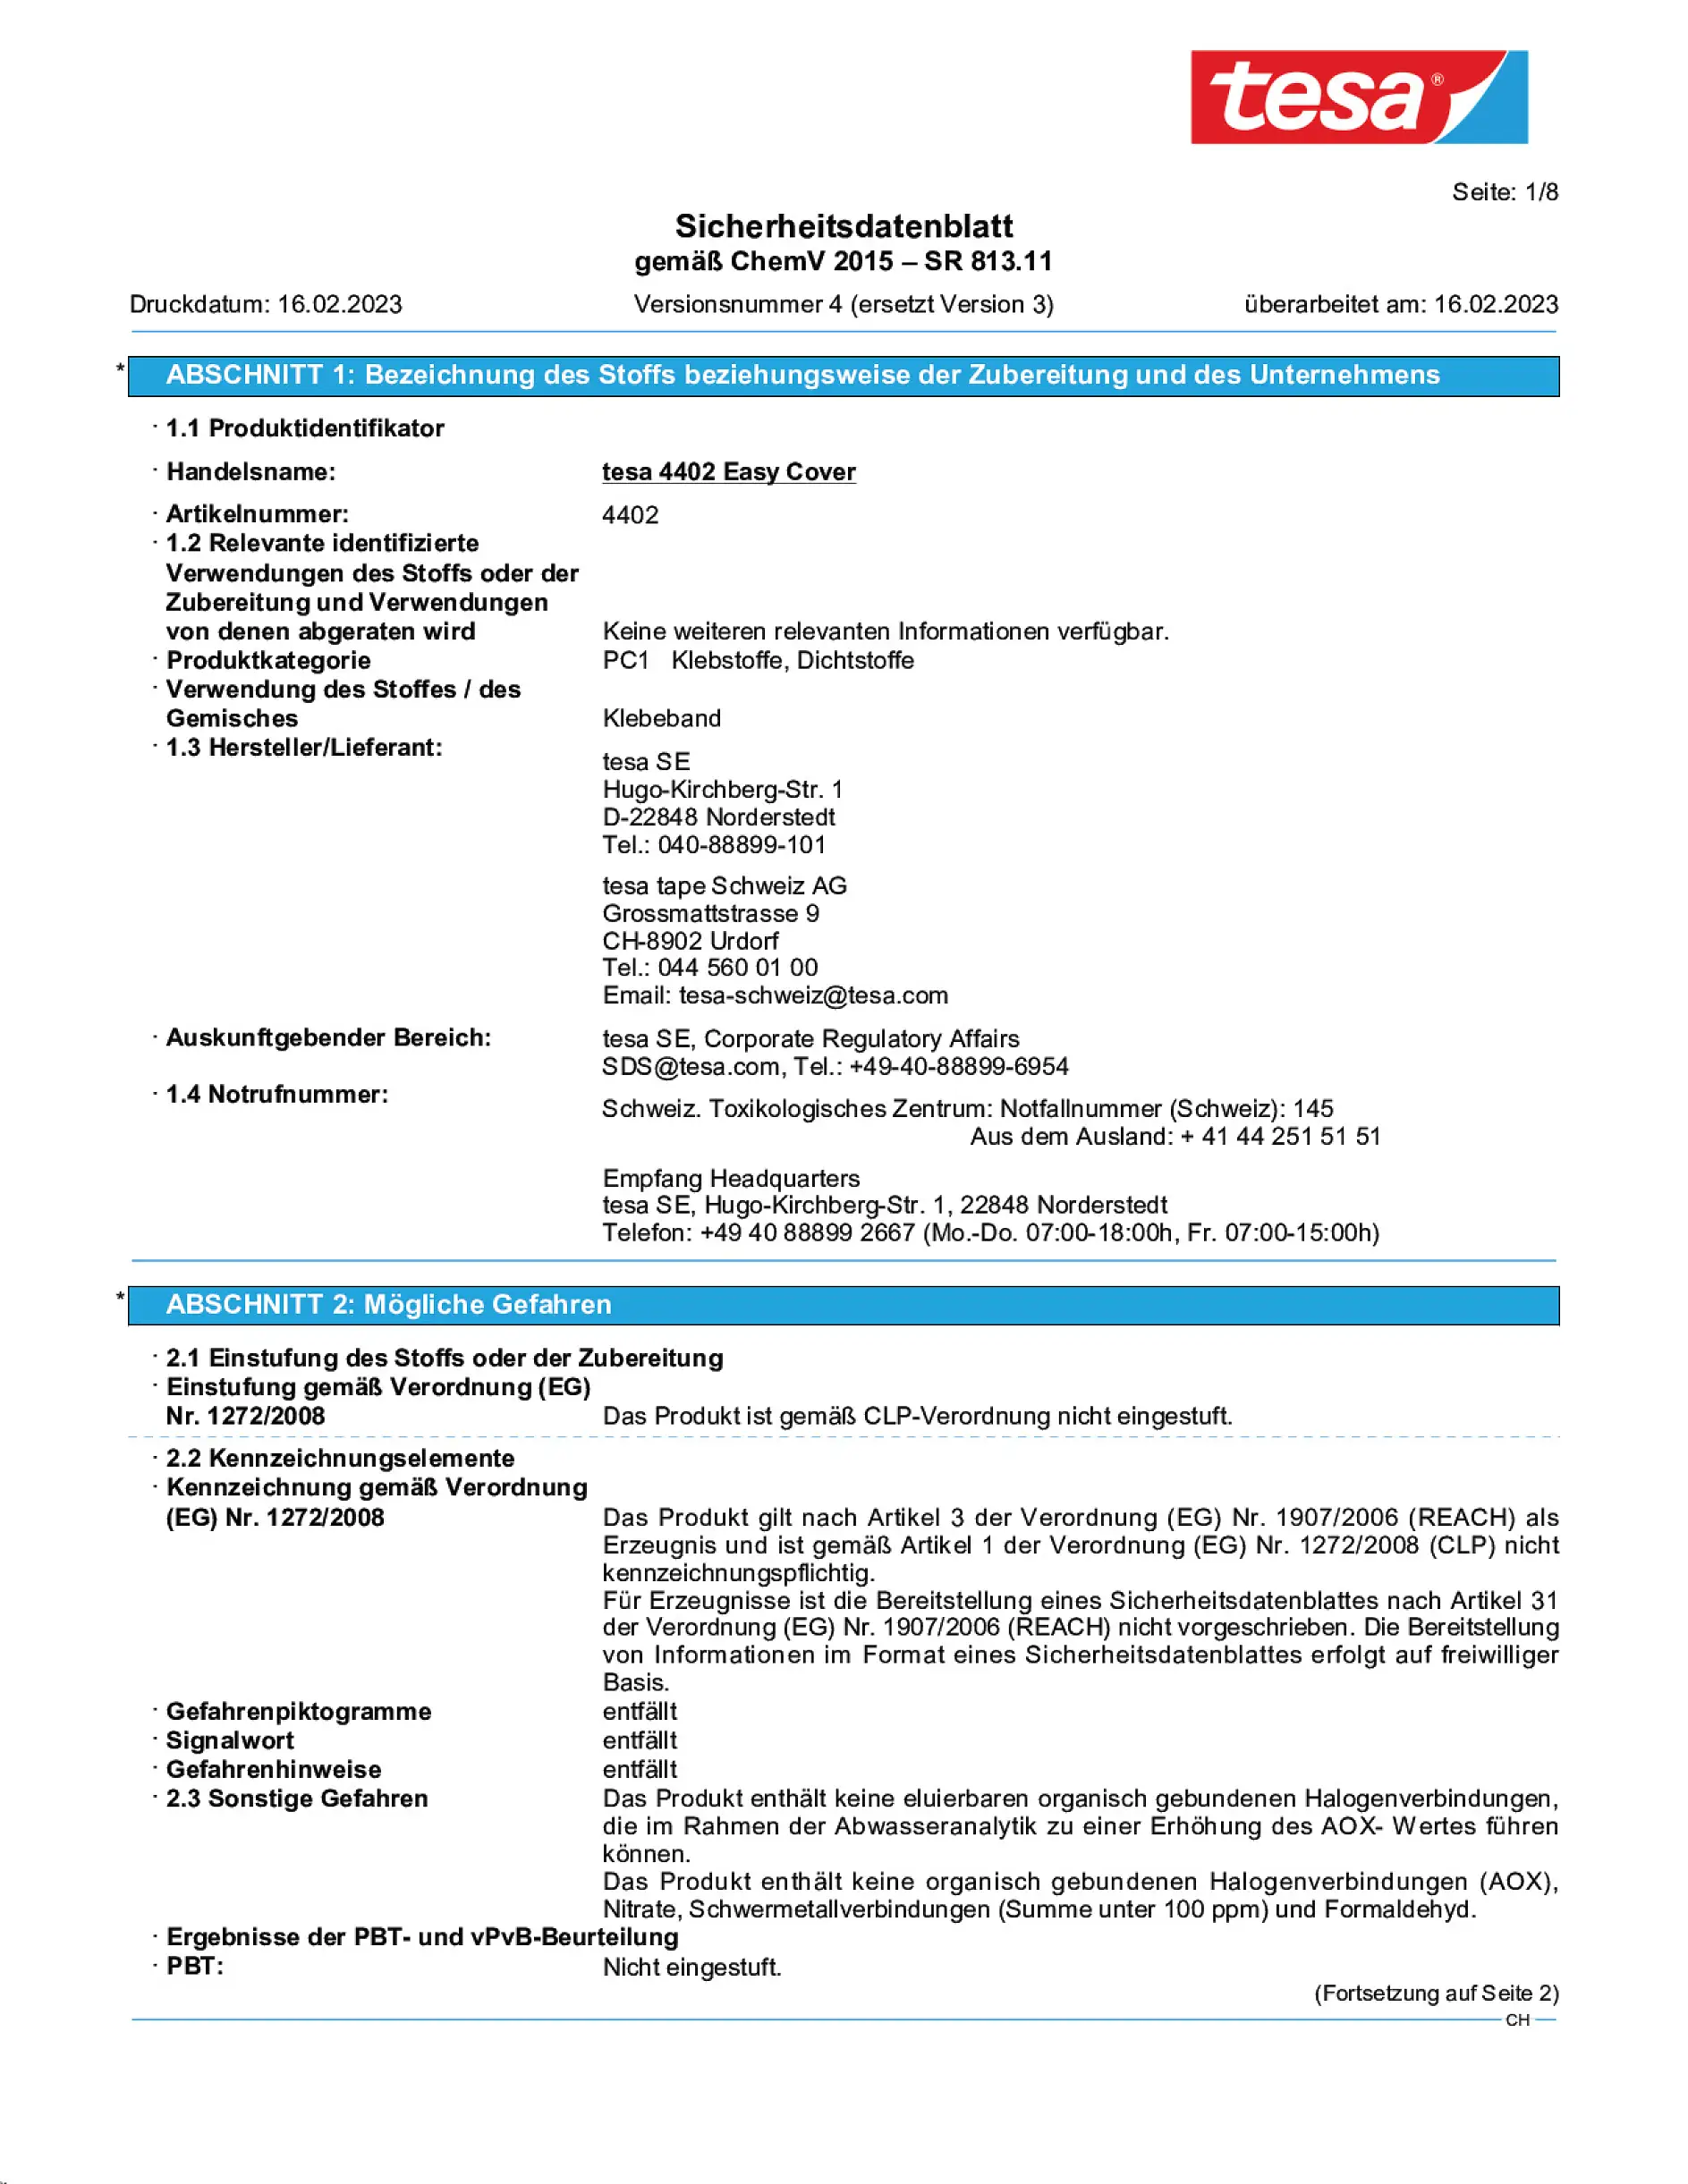 Safety data sheet_tesa® Professional 04402_de-CH_v4